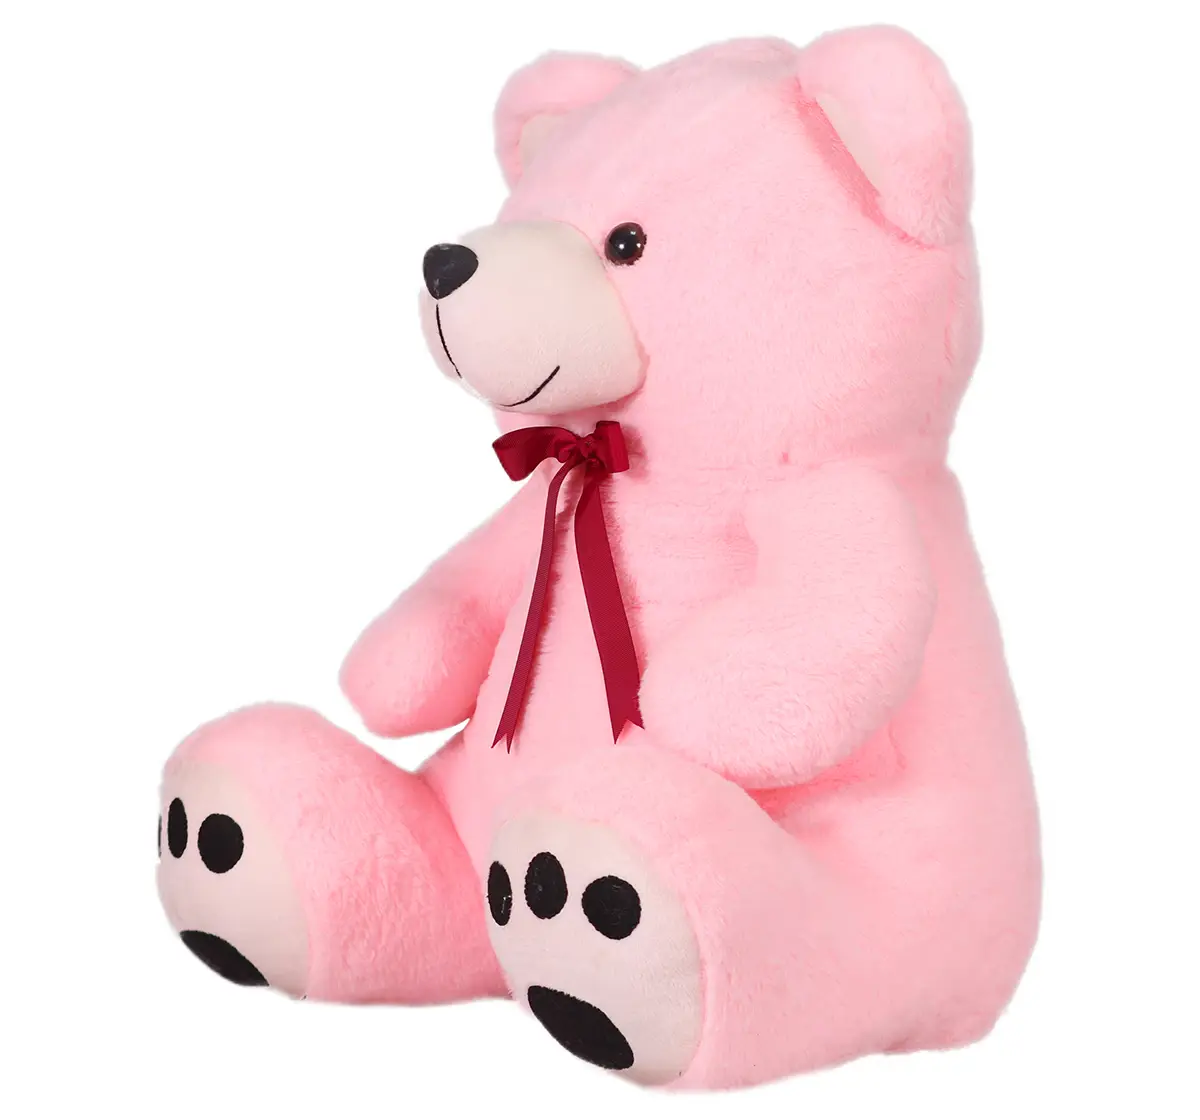 Mirada 55cm jumbo teddy bear soft toy Multicolor 3Y+